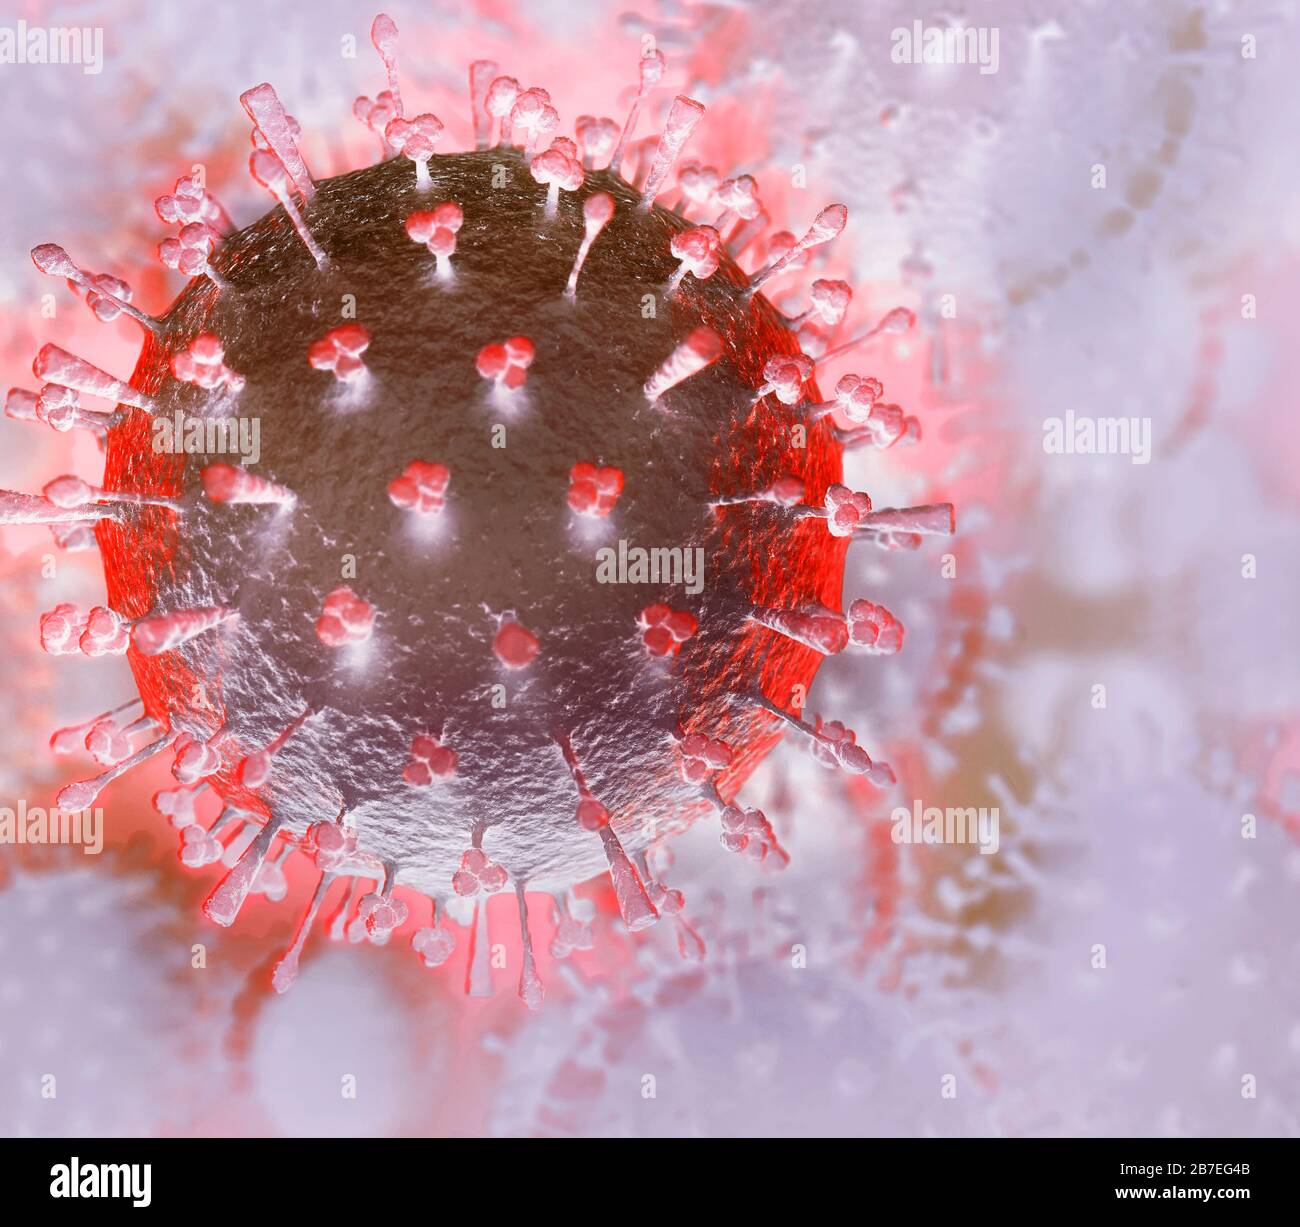 Coronavirus, COVID-19, artistic rendering in bright colors.  Corona virus particles conceptual 3D illustration. Spreading virus, epidemic and pandemic Stock Photo